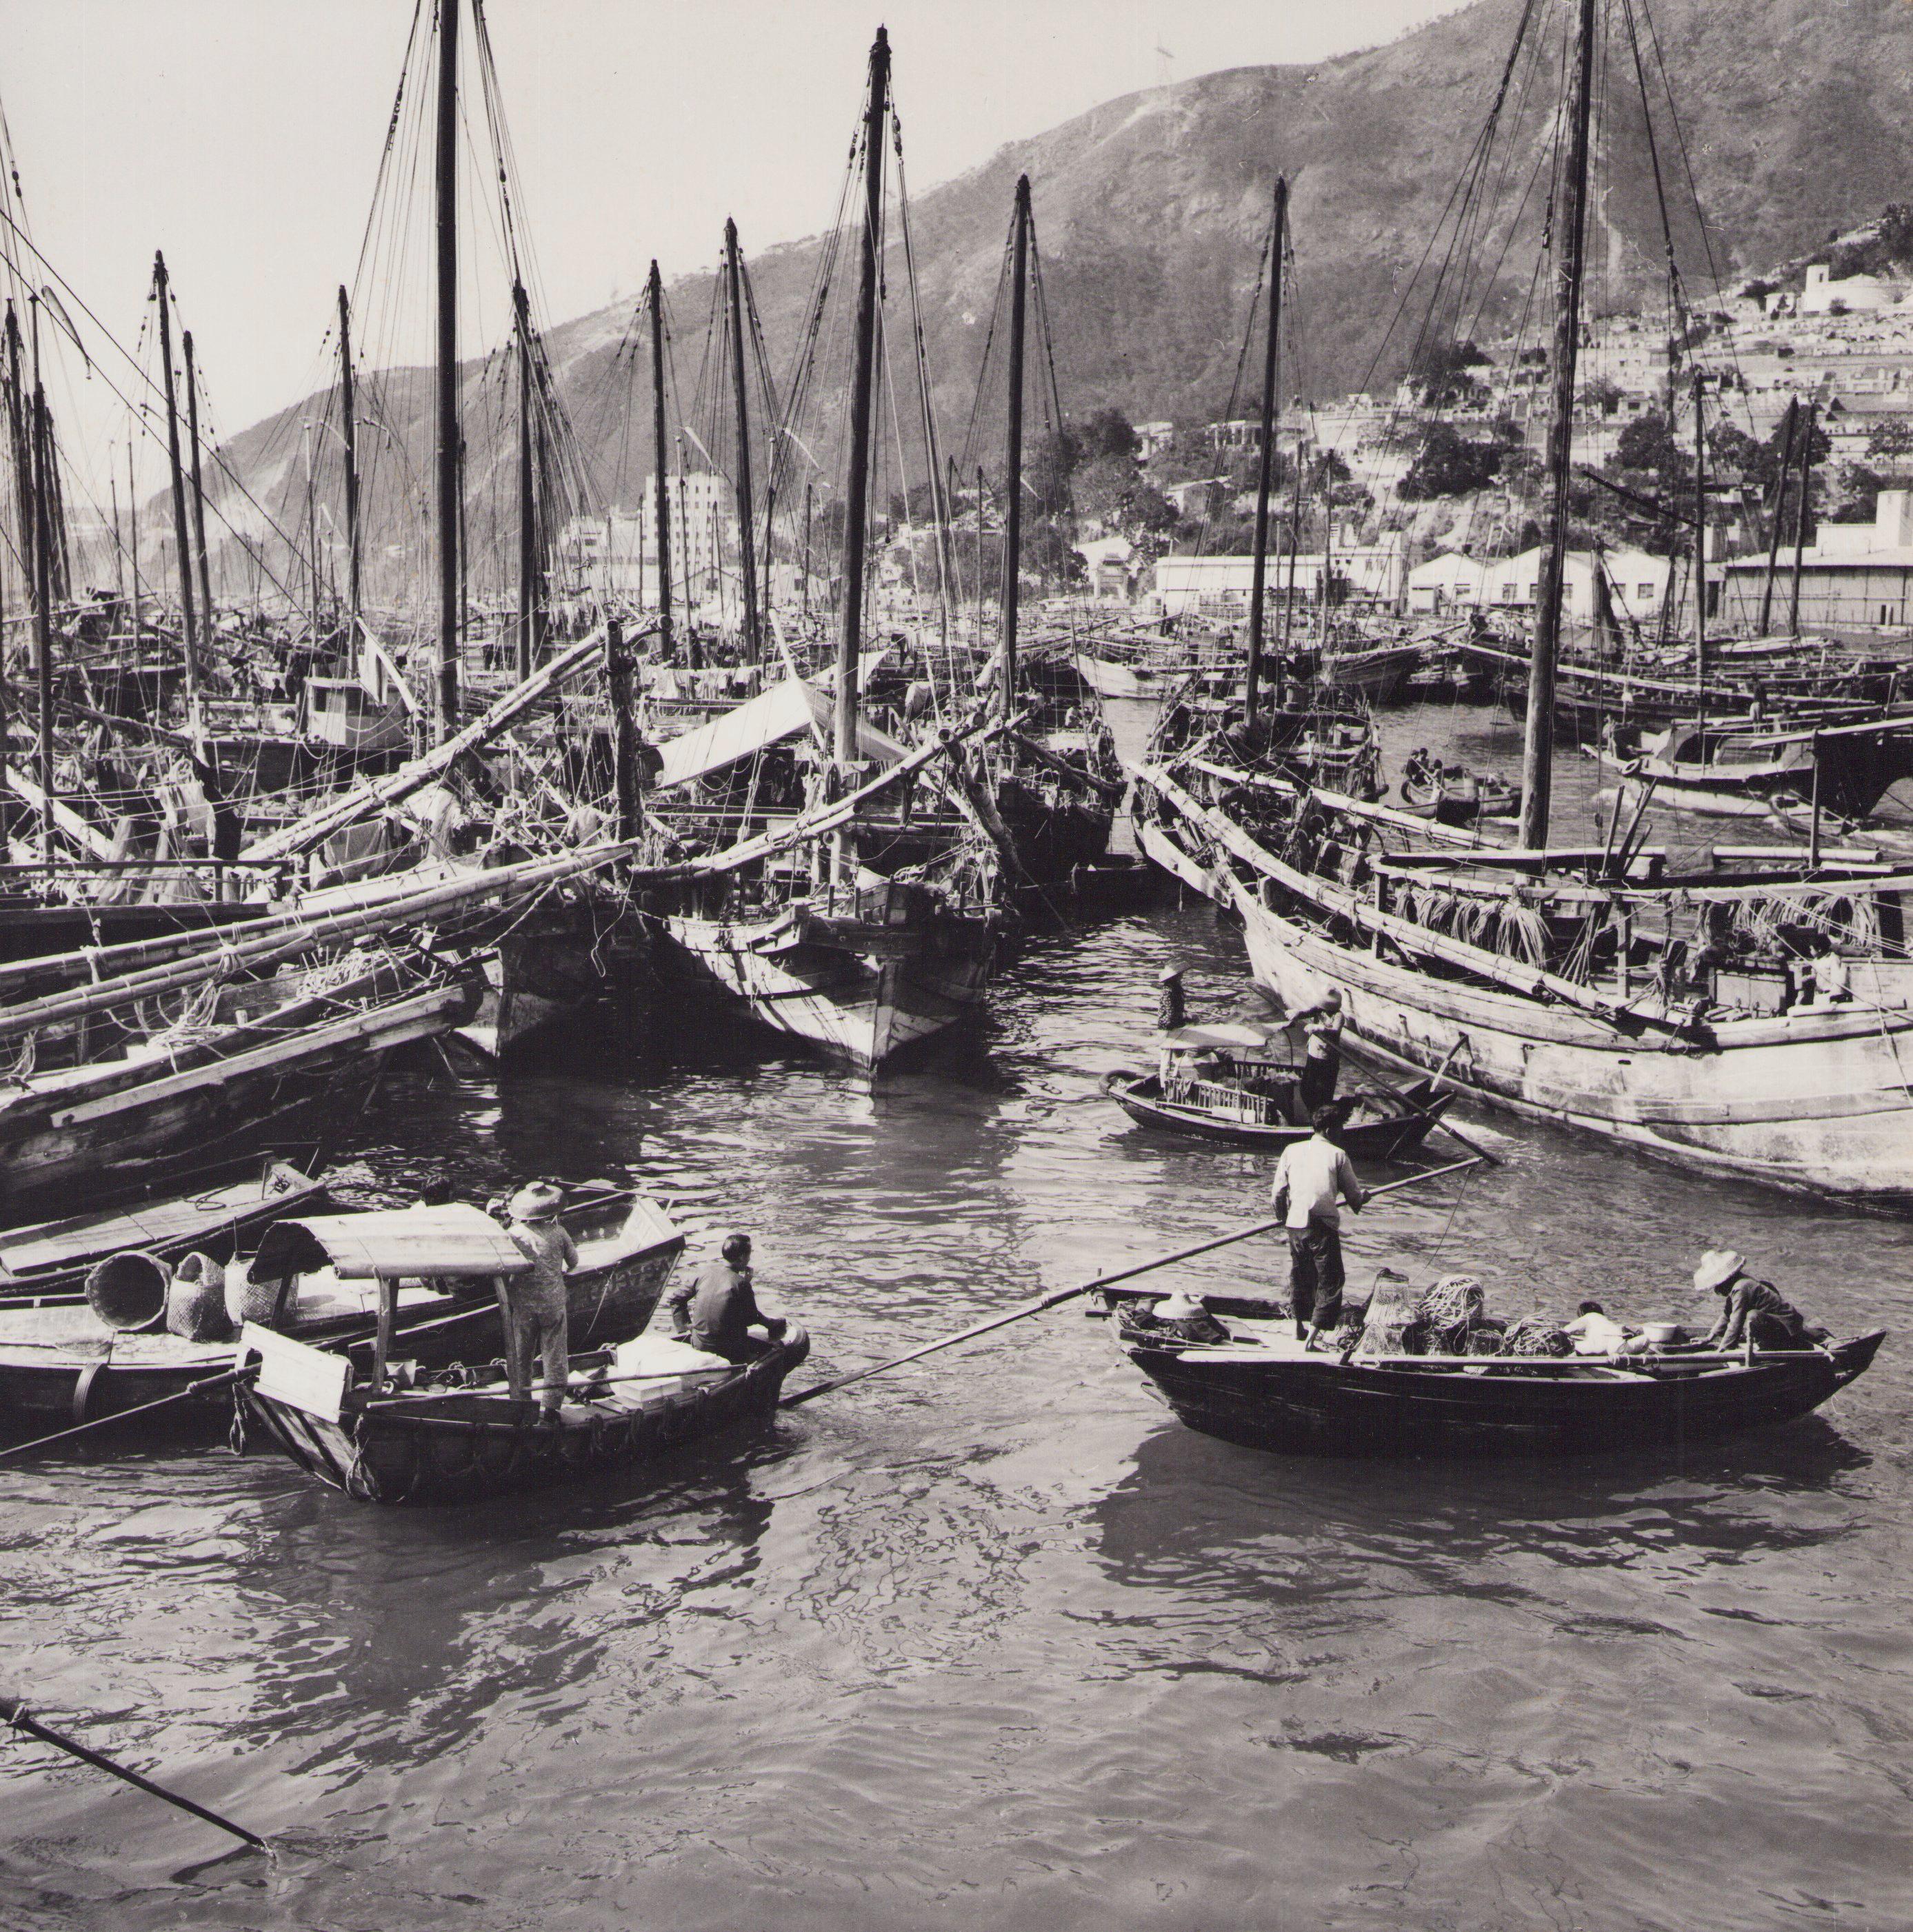 Hanna Seidel Portrait Photograph - Hong Kong, Ships, Haven, Black and White Photography, 1960s, 24 x 24, 1 cm